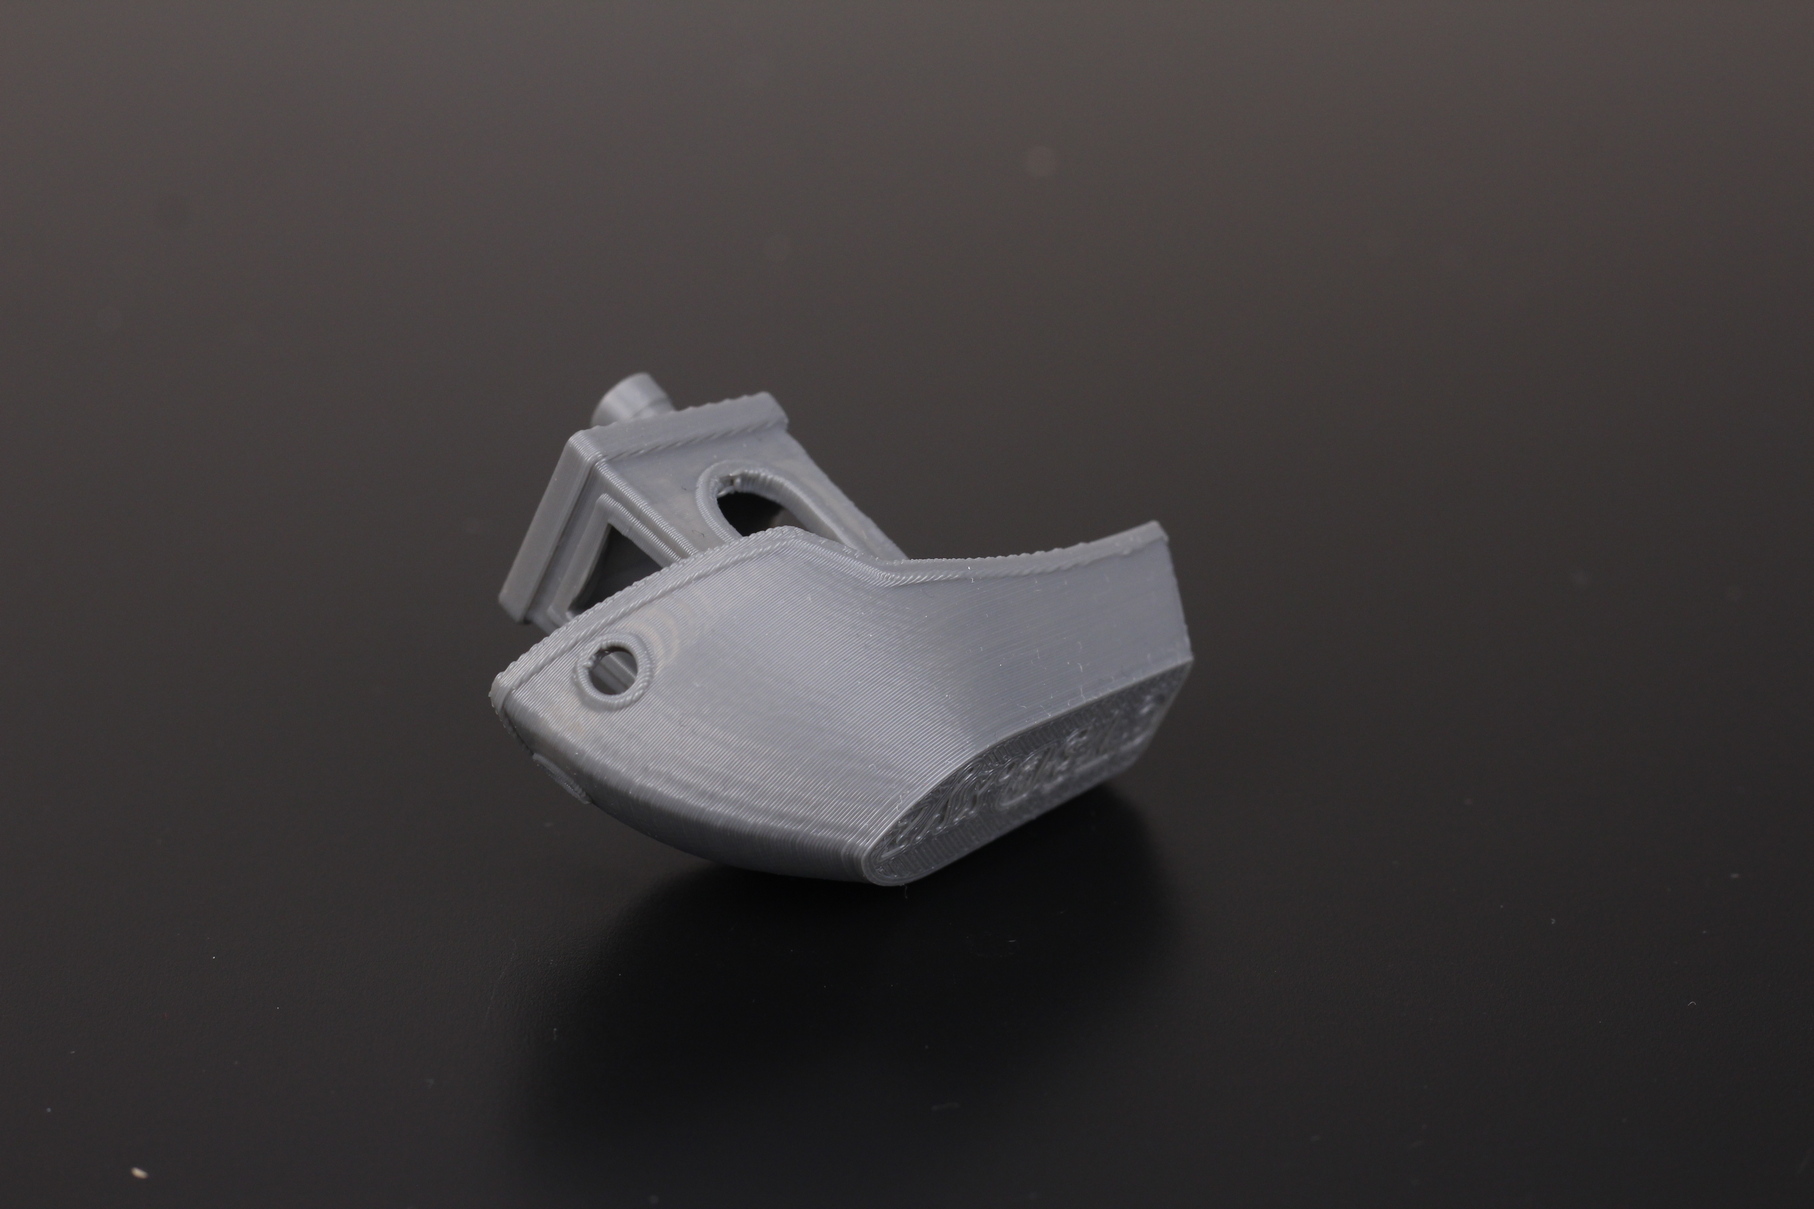 3D Benchy printed on Sidewinder X2 2 | Artillery Sidewinder X2 Review: A Refined Sidewinder X1?